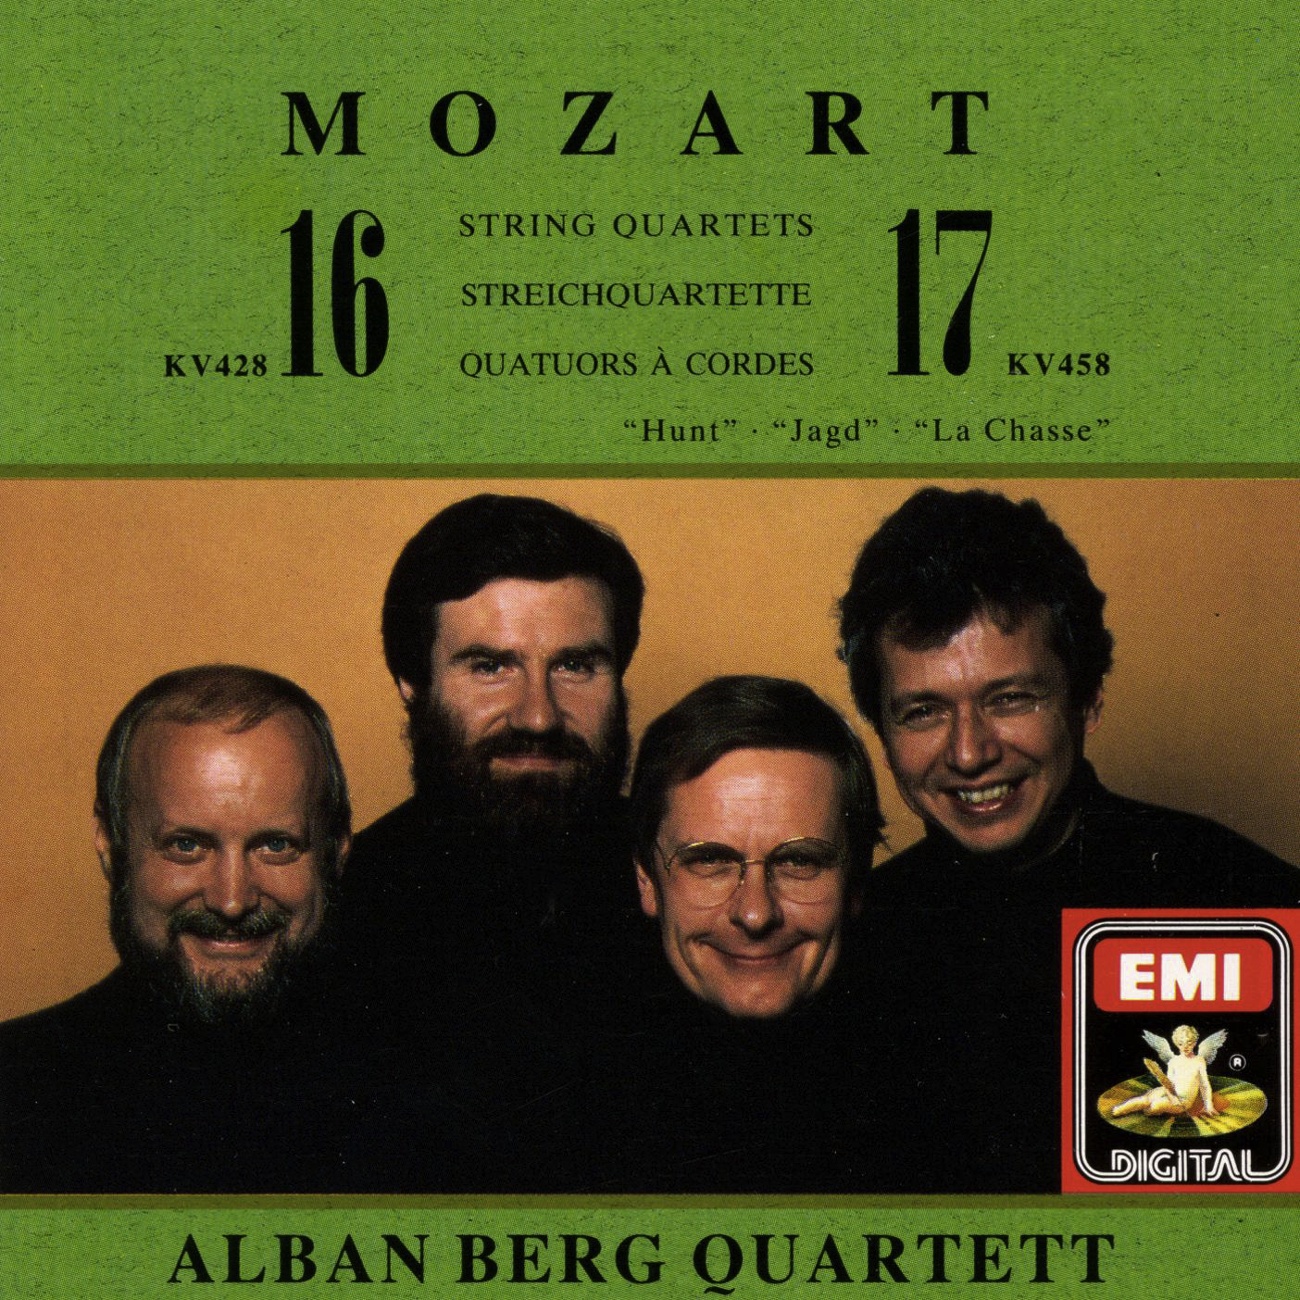 1er Mvt Allegro Vivace Assai (String Quartet N17)